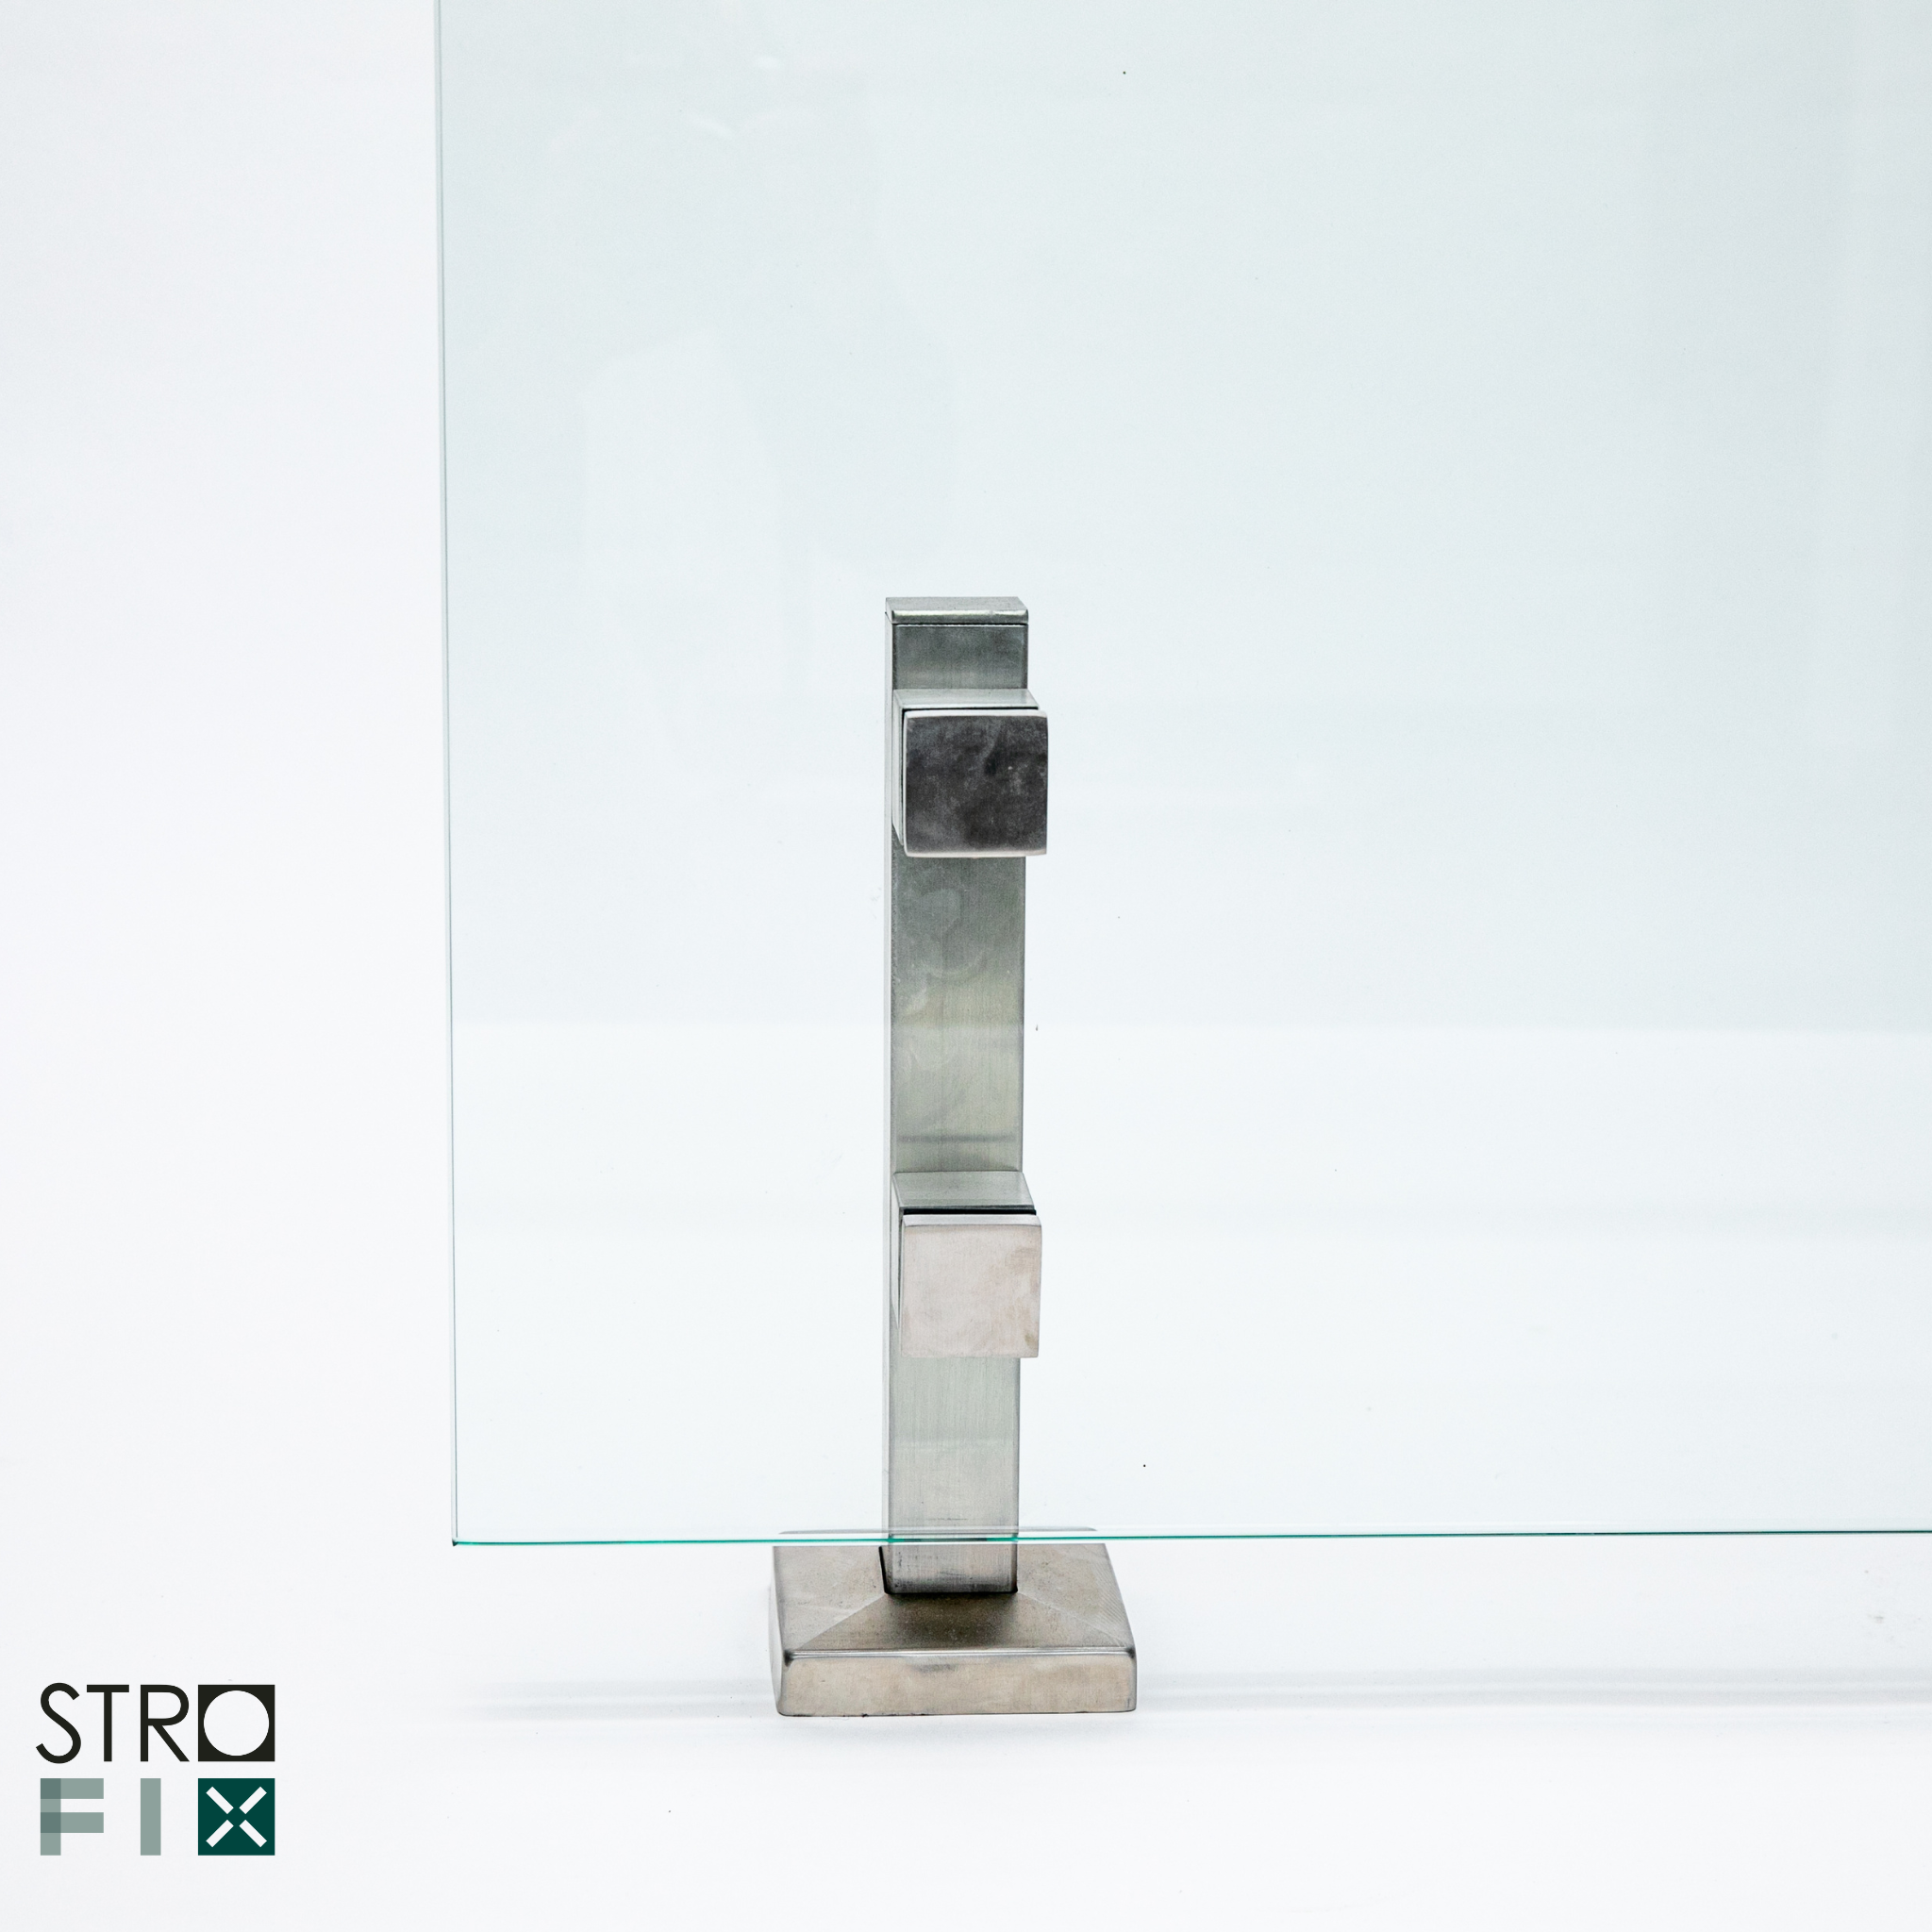 Base glass clamp - StroFIX